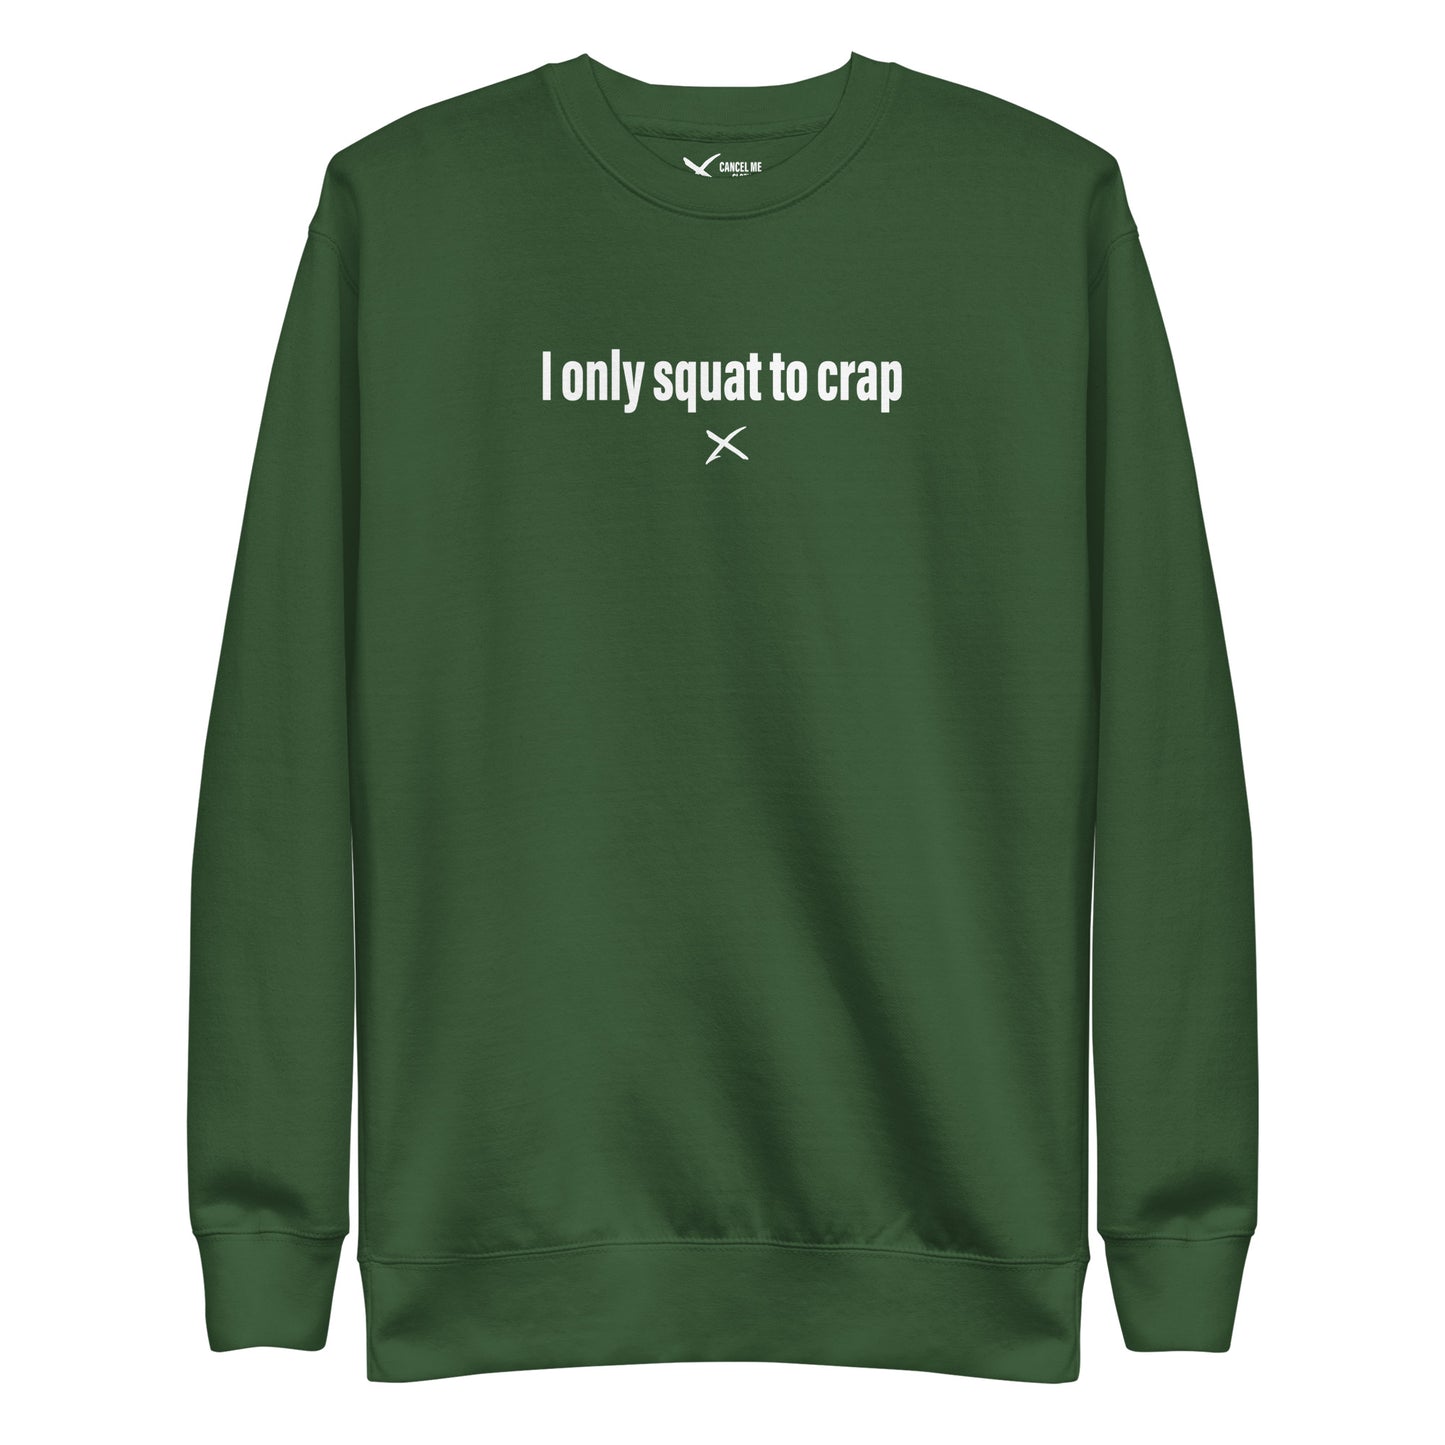 I only squat to crap - Sweatshirt